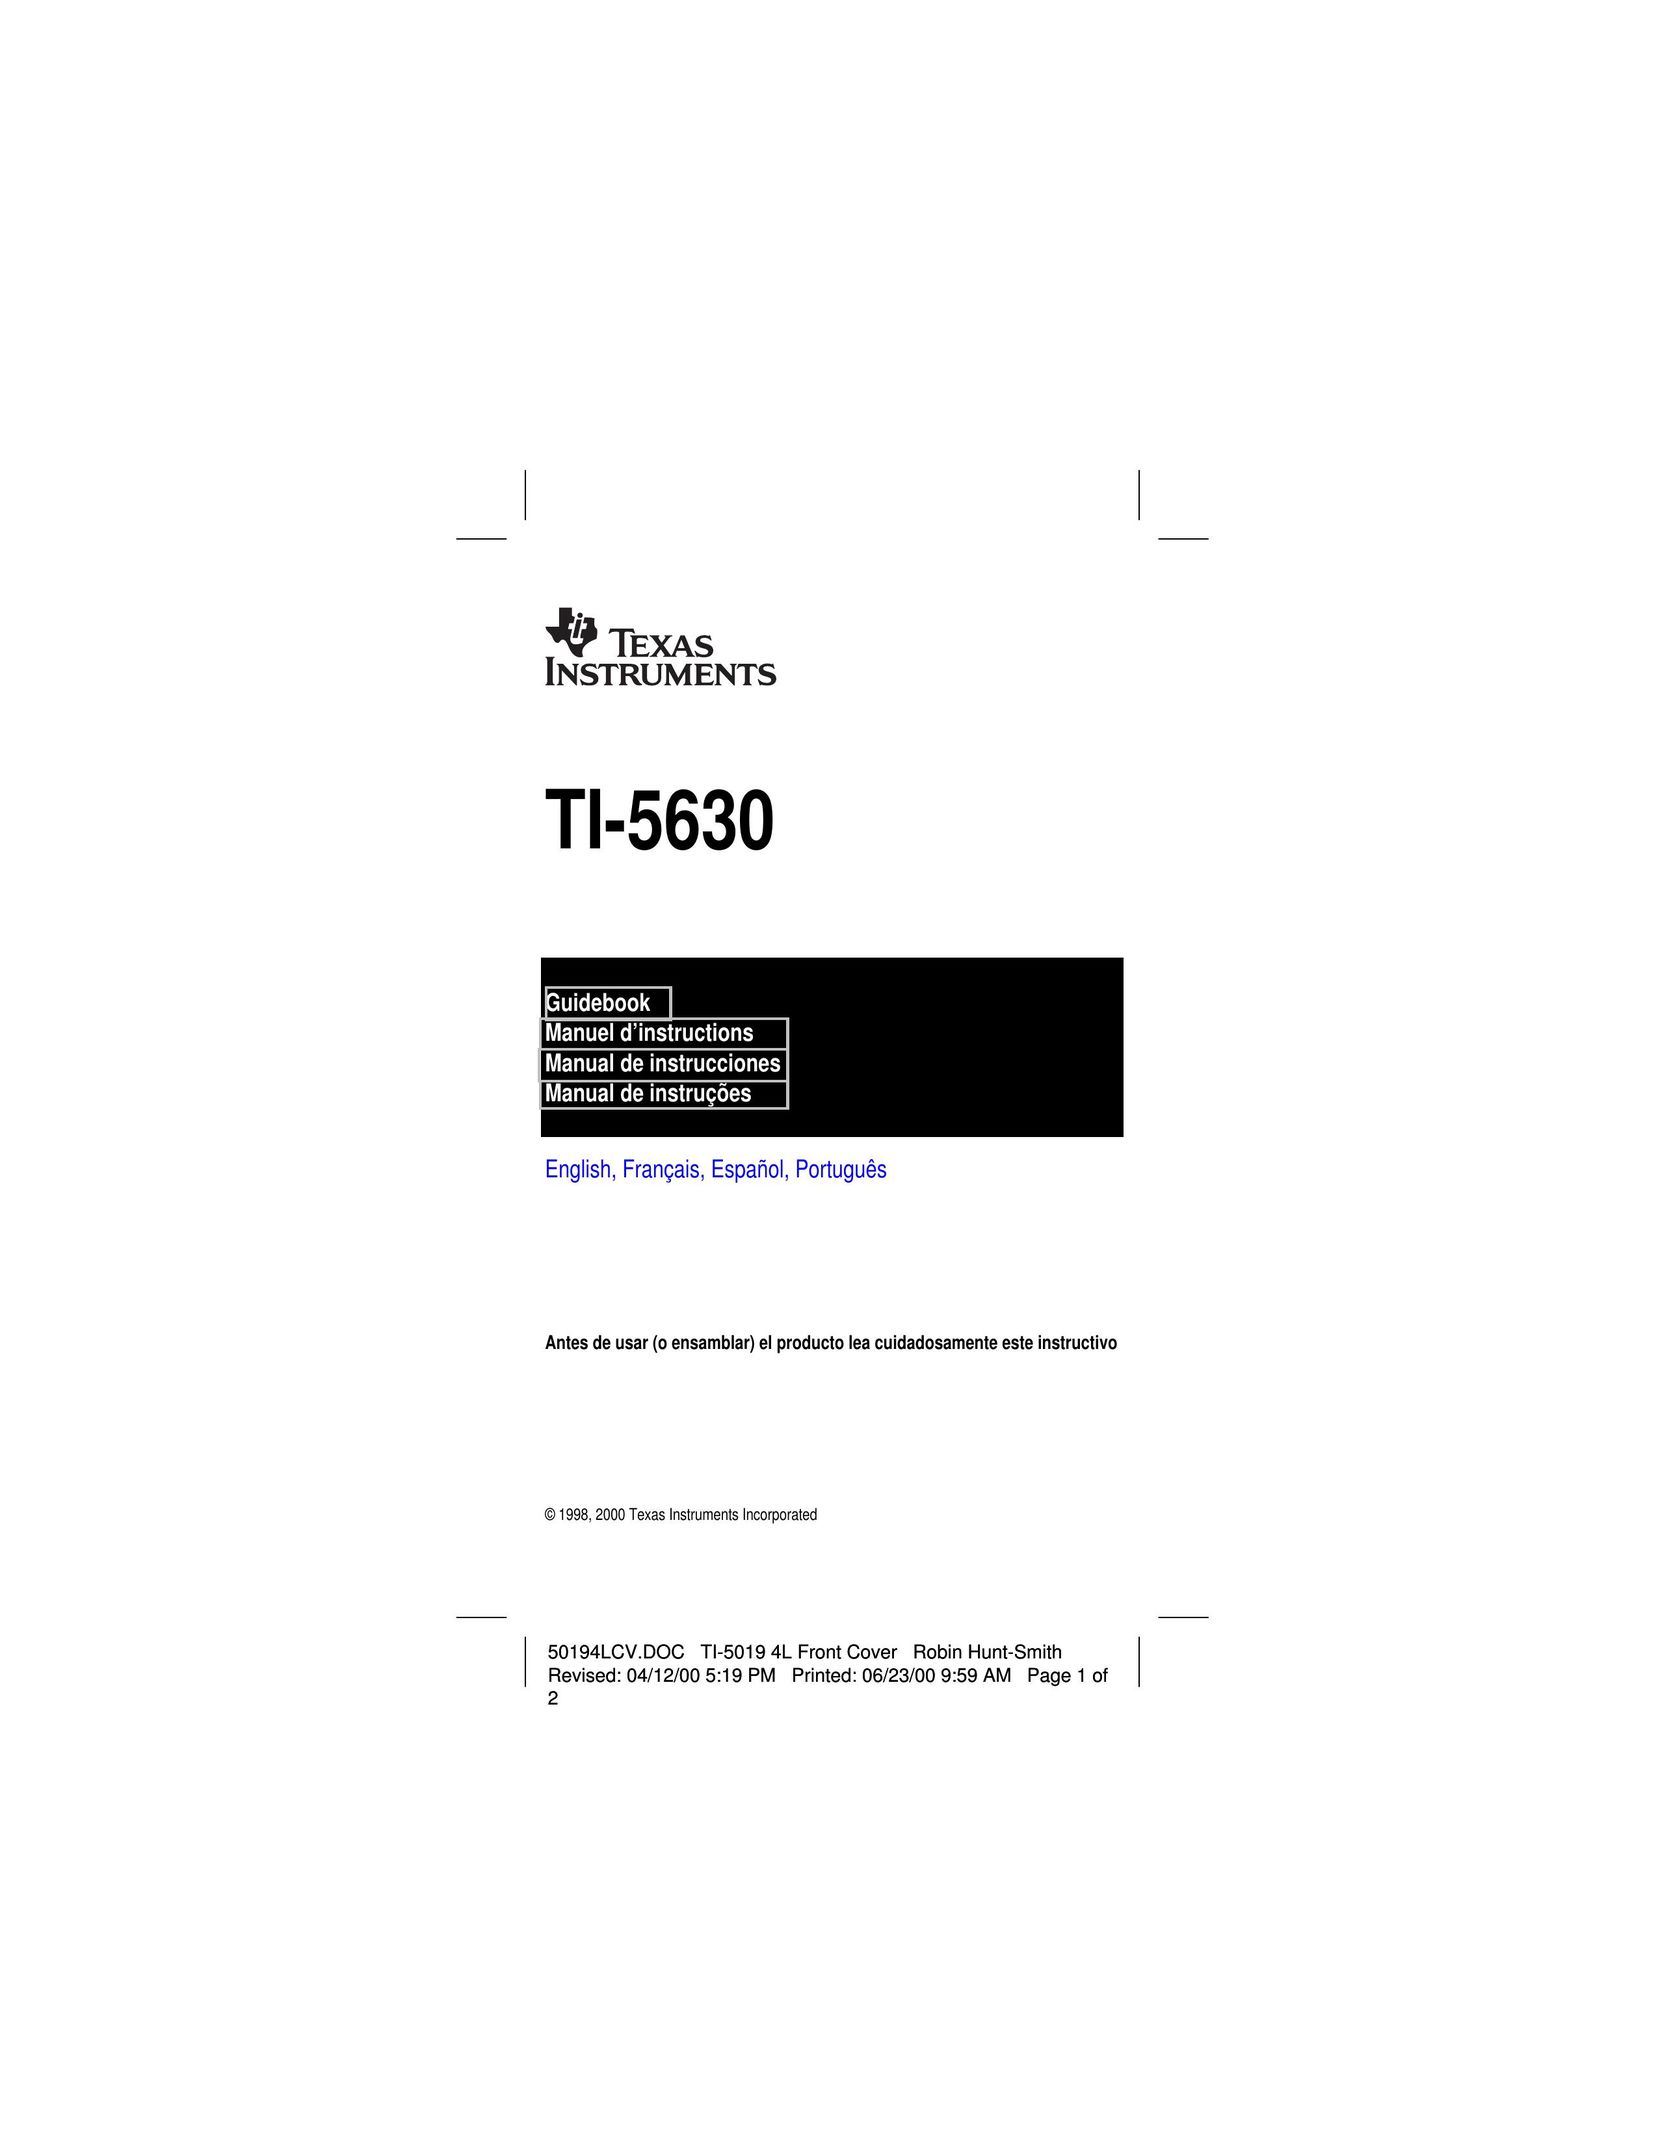 Texas Instruments TI-5630 Printer User Manual